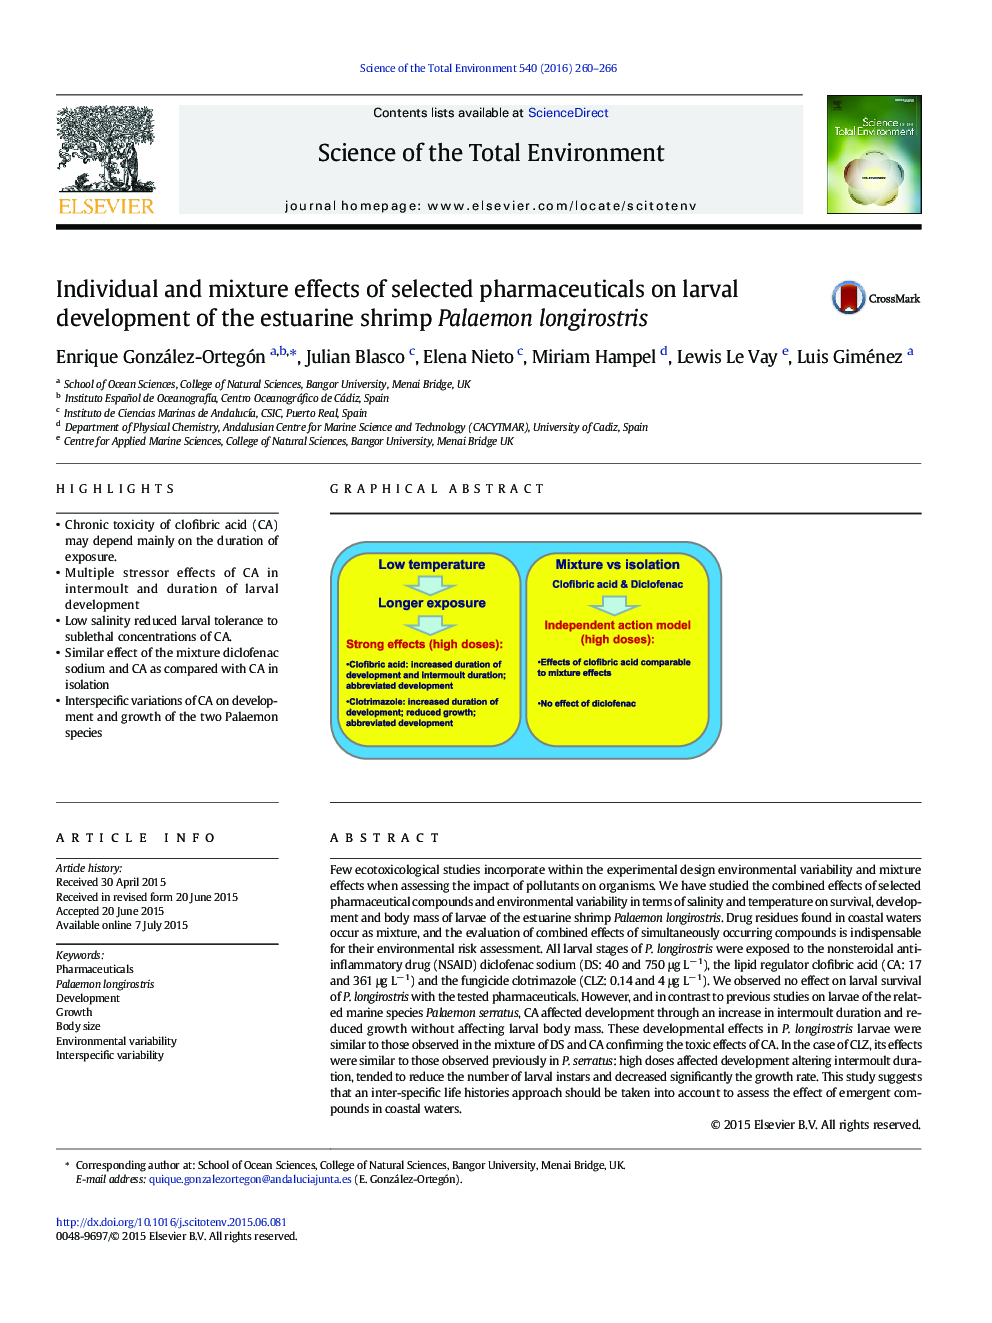 Individual and mixture effects of selected pharmaceuticals on larval development of the estuarine shrimp Palaemon longirostris